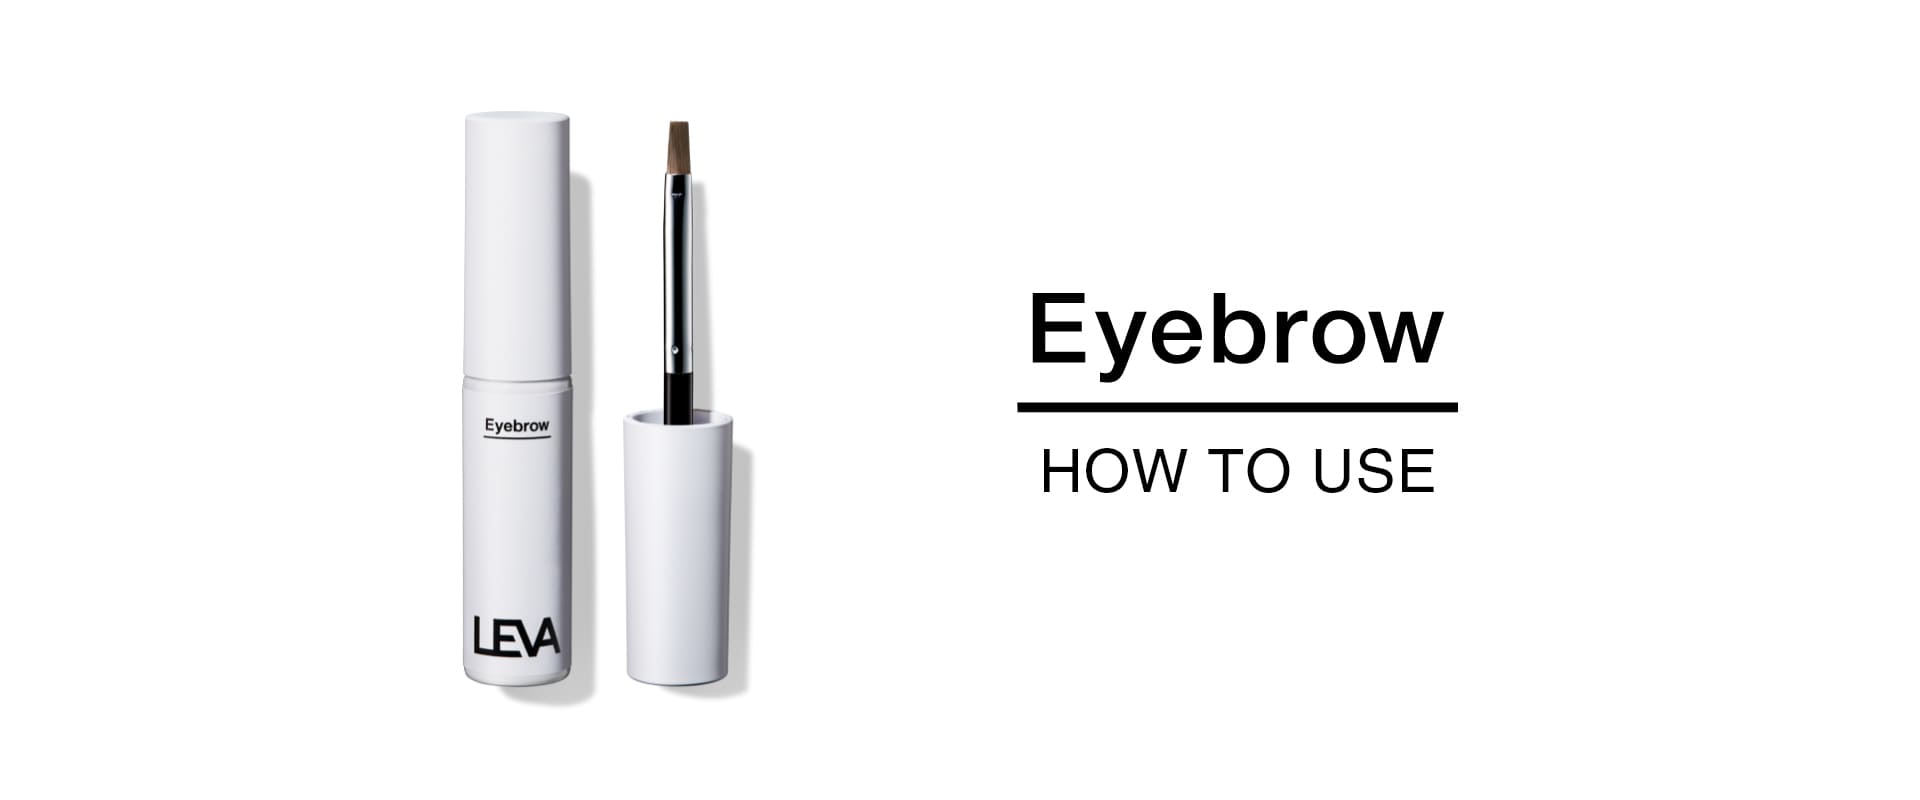 Eyebrow HOW TO USE